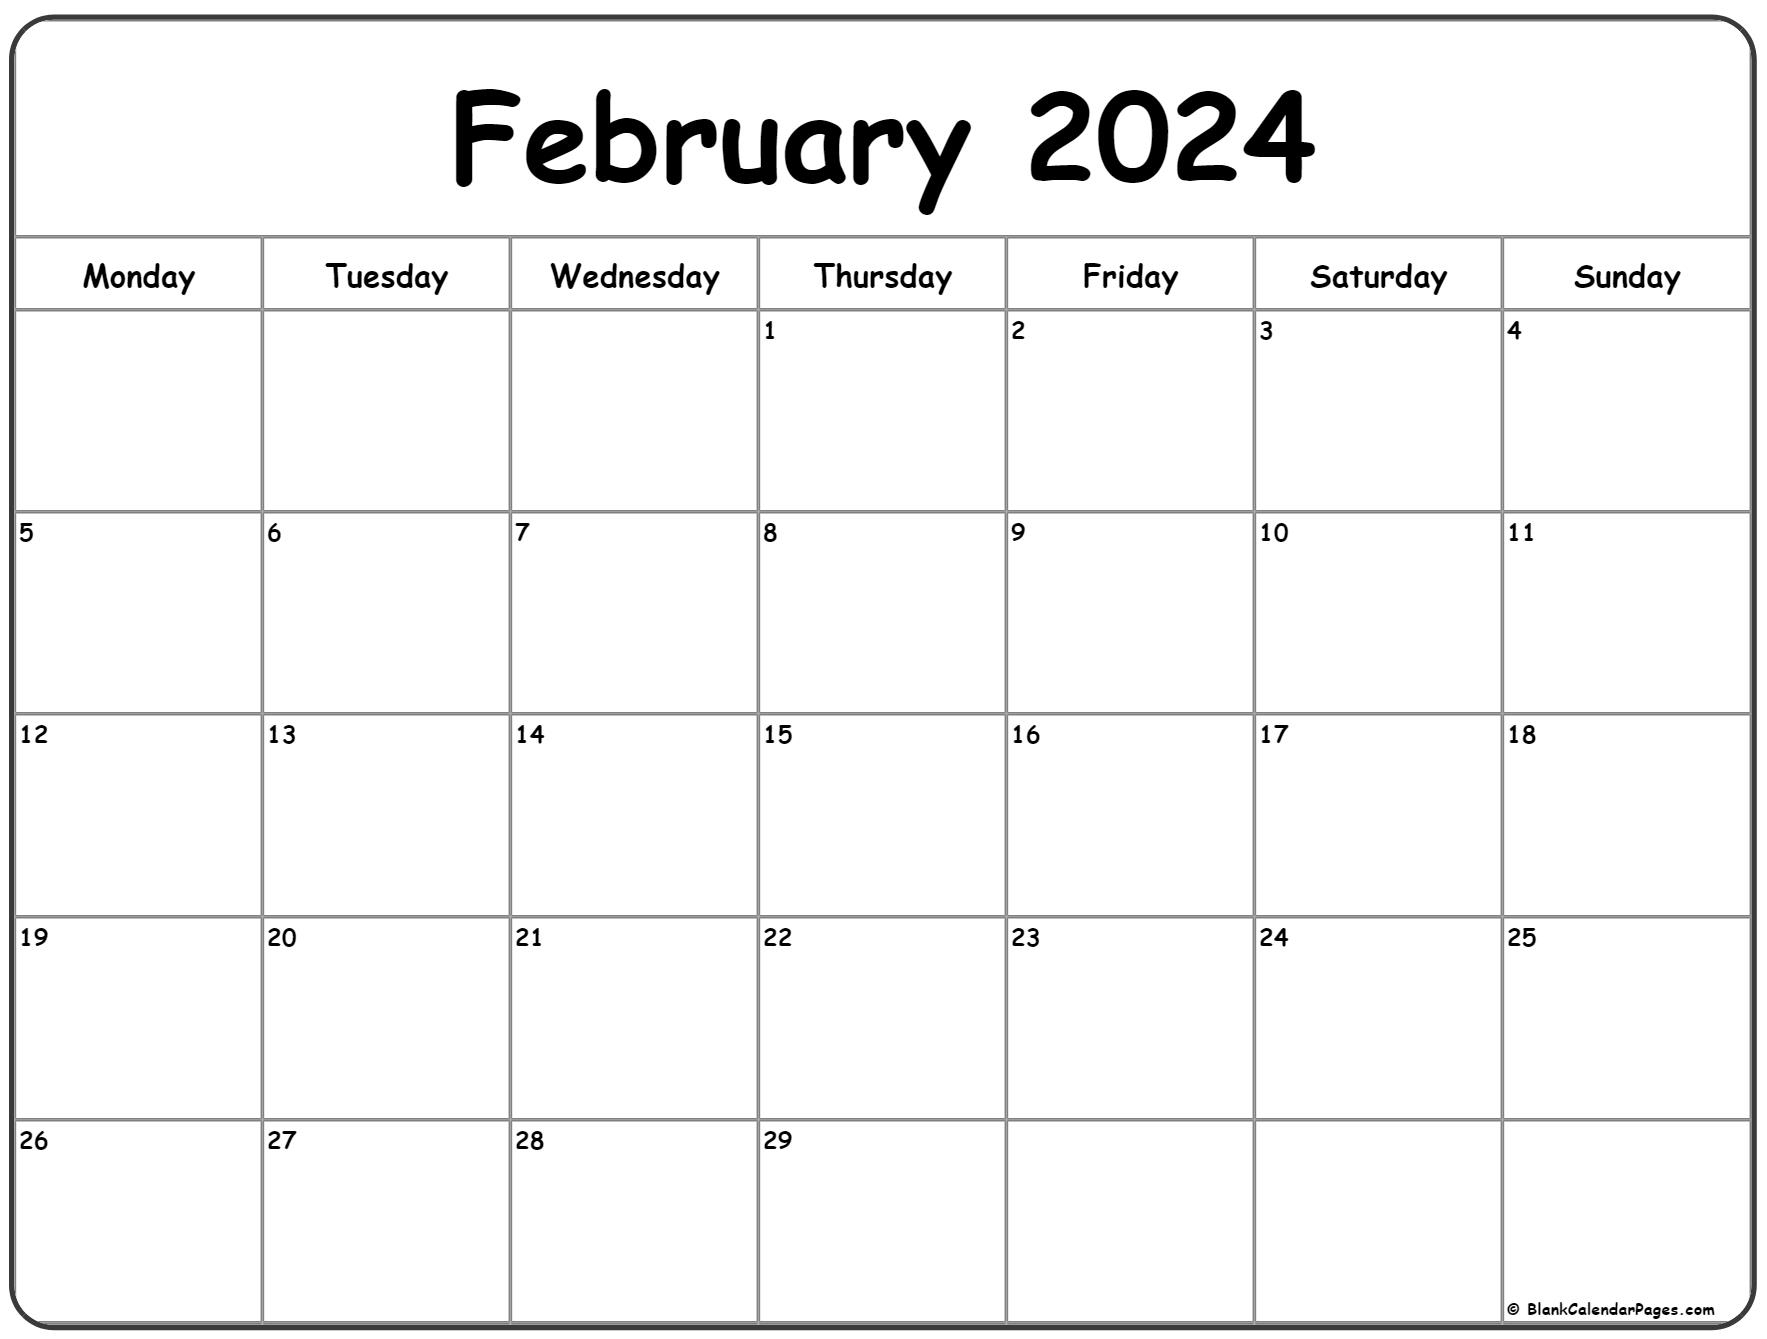 February 2024 Monday Calendar | Monday To Sunday for Blank February 2024 Calendar Free Printable